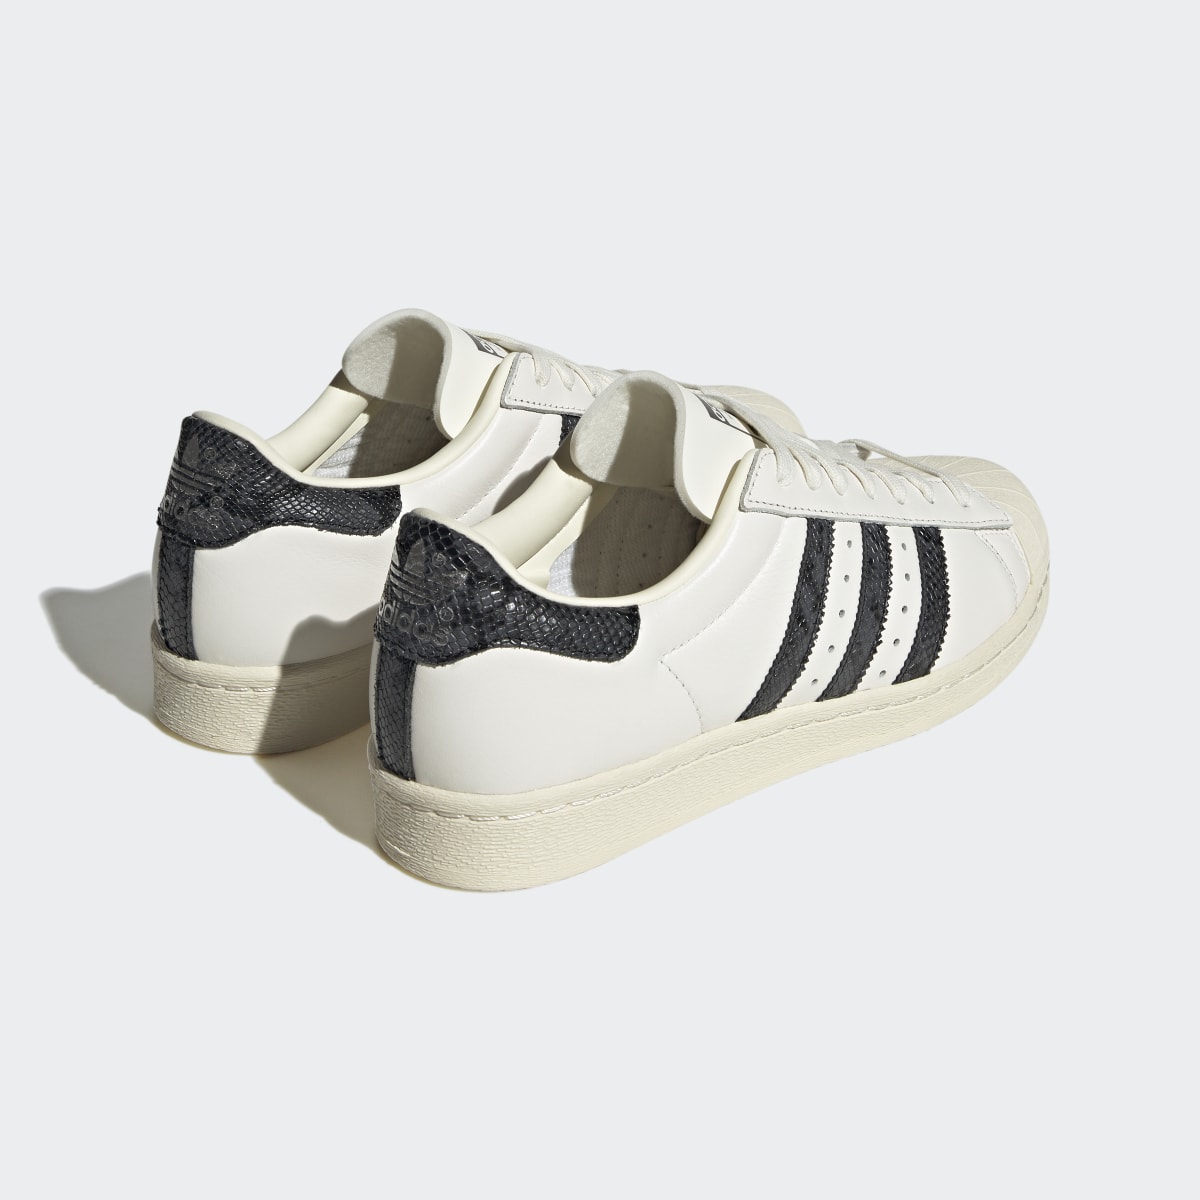 Adidas Superstar 82 Shoes. 6